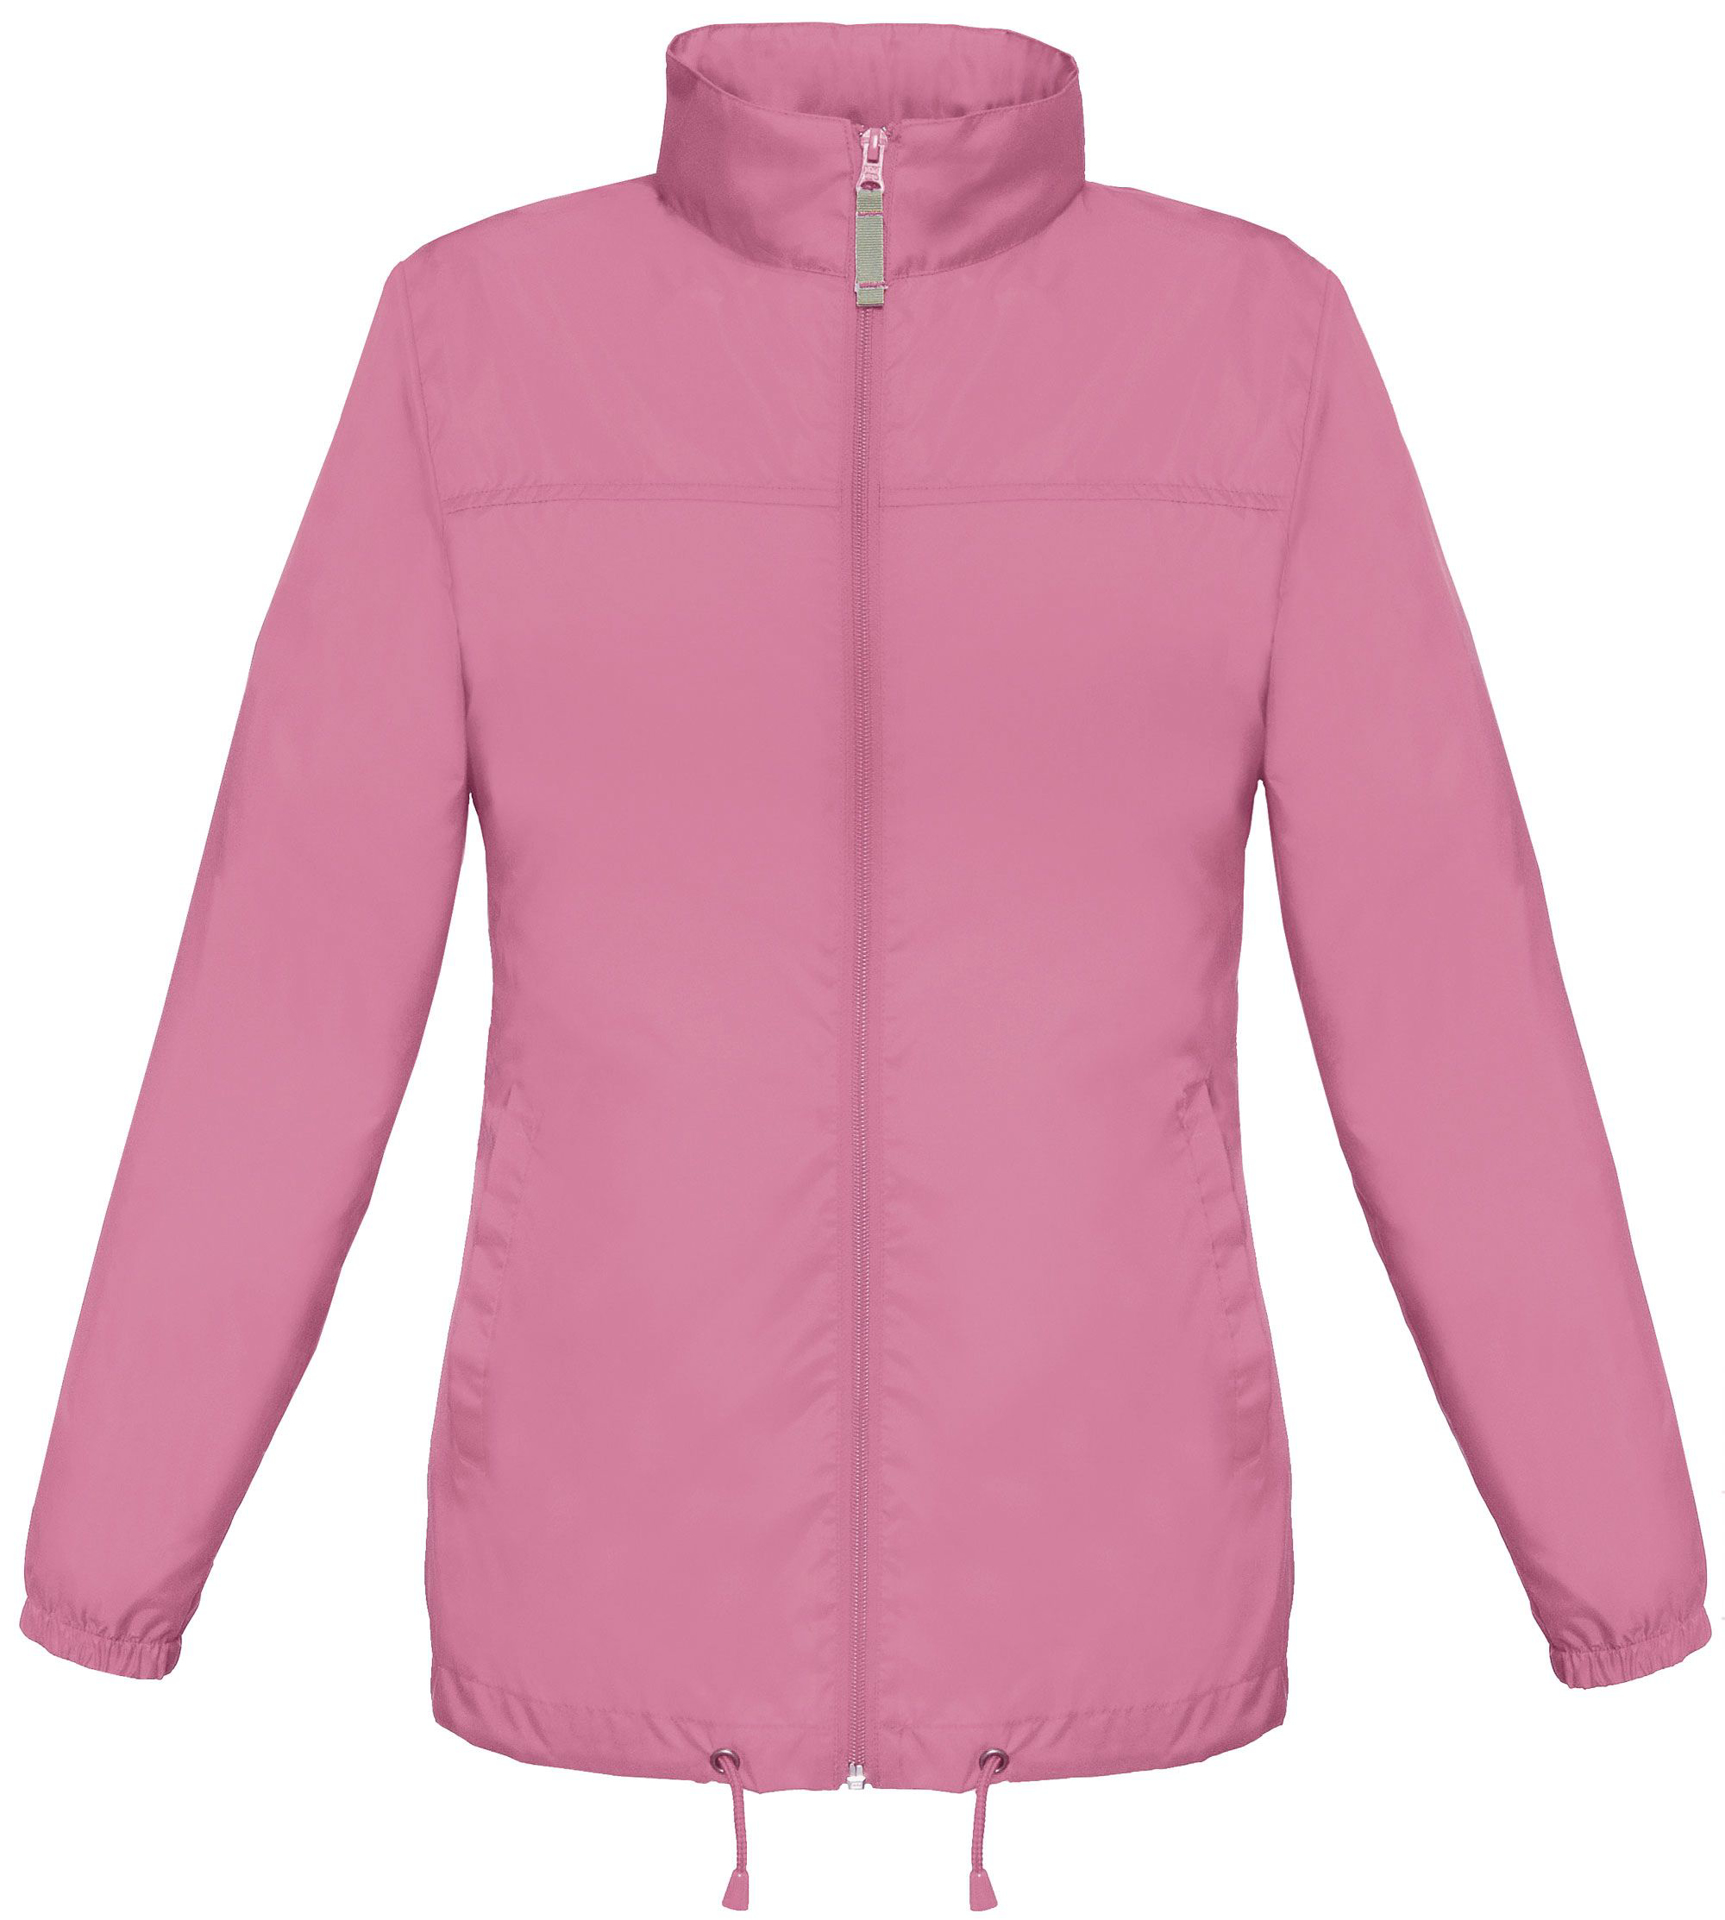 Women's Sirocco Jacket in pink